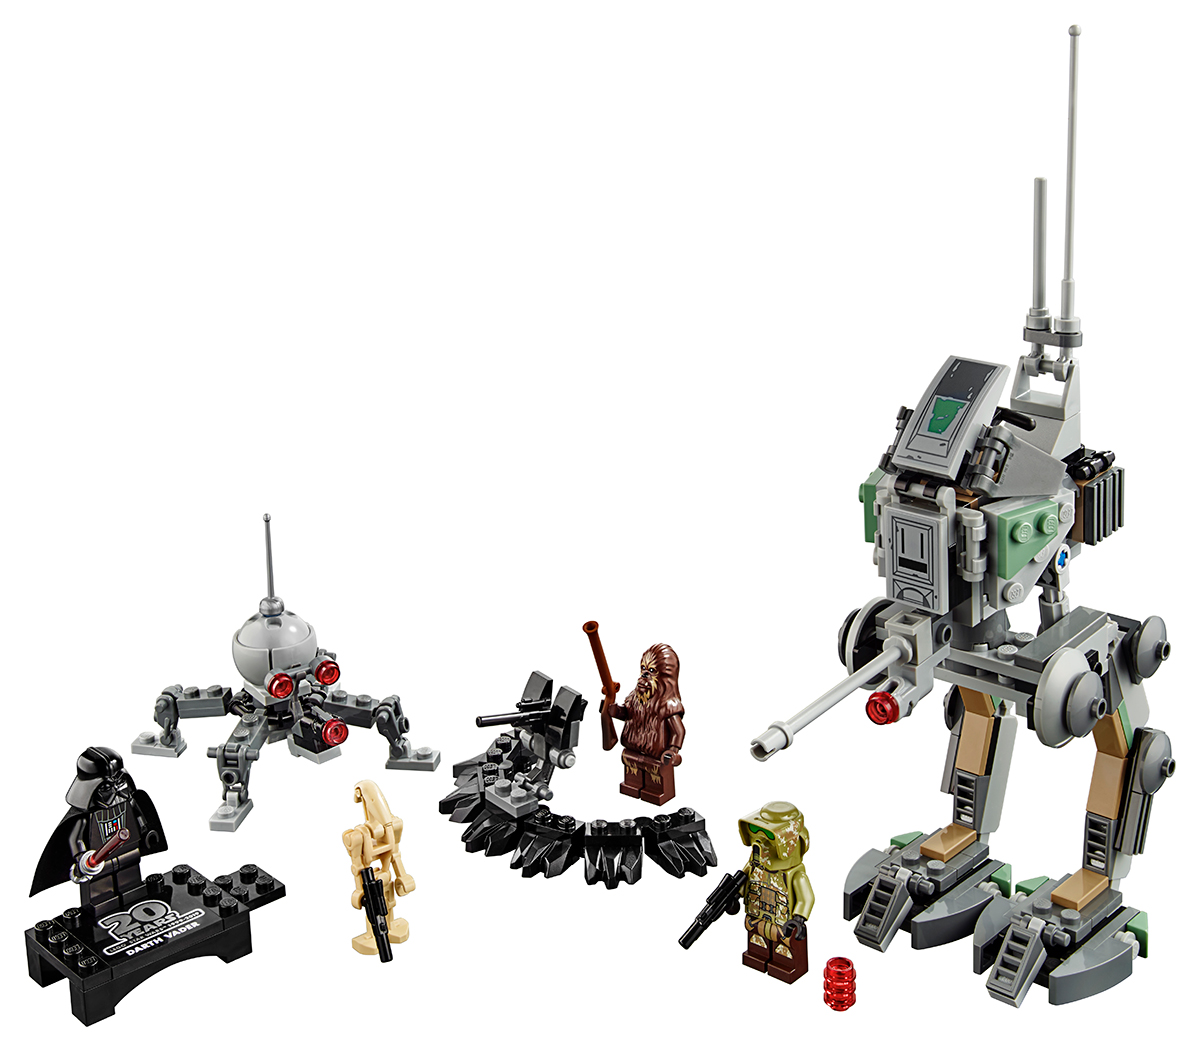 LEGO Star Wars 20th Anniversary